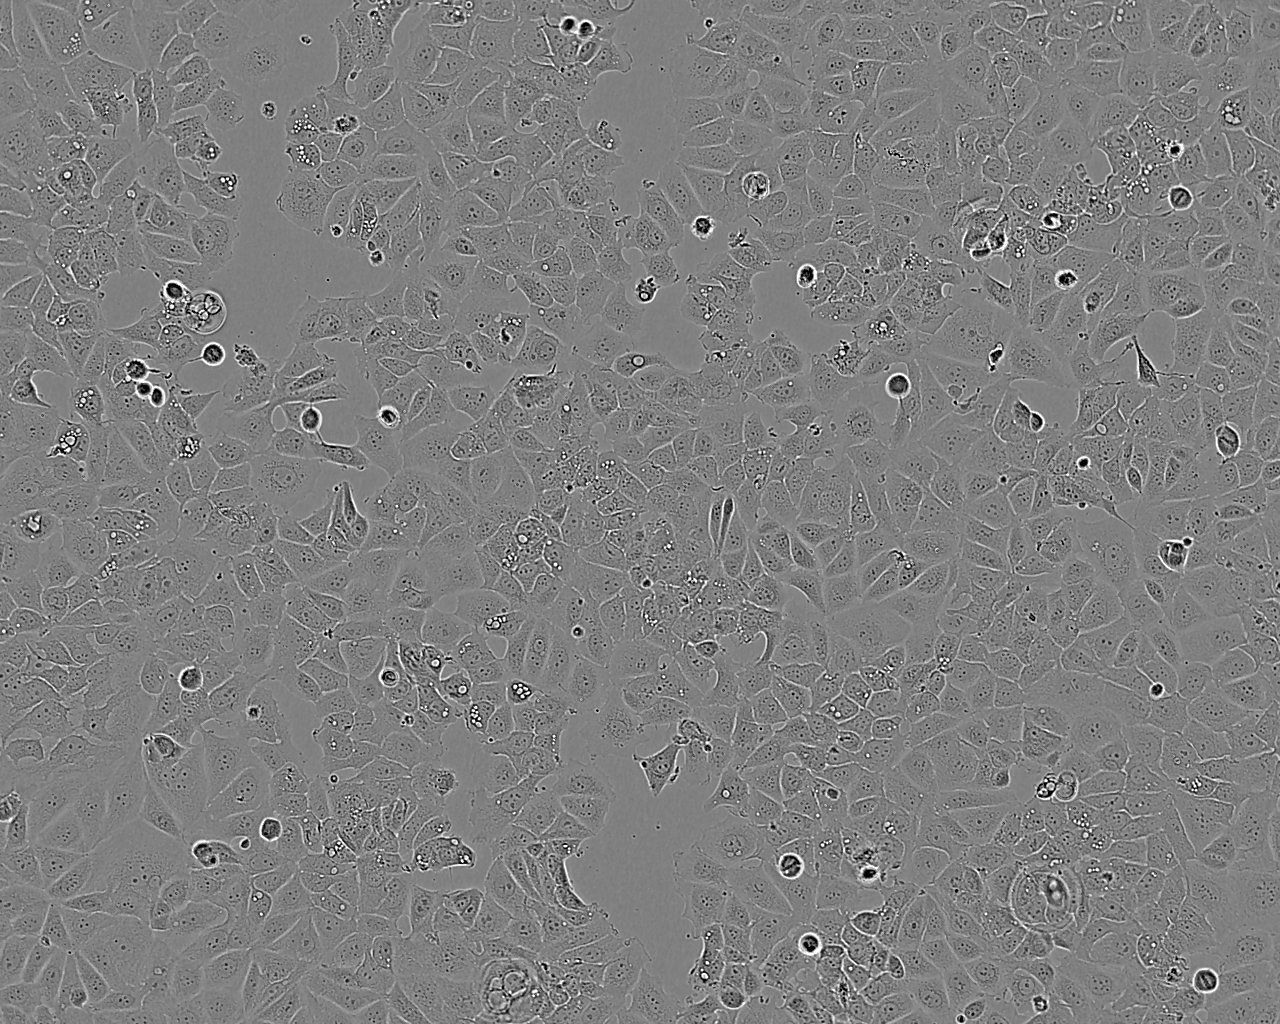 DK-MG cell line人胶质母细胞瘤细胞系,DK-MG cell line